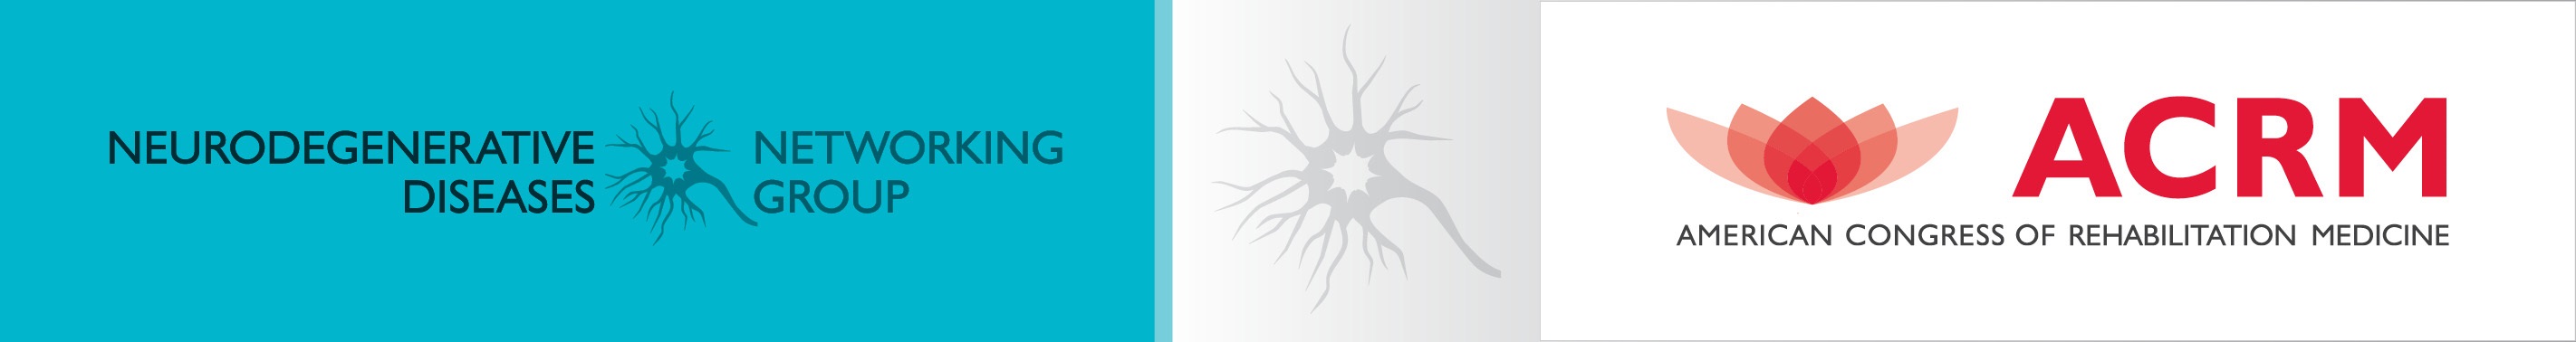 ACRM Neurodegenerative Diseases Networking Group banner